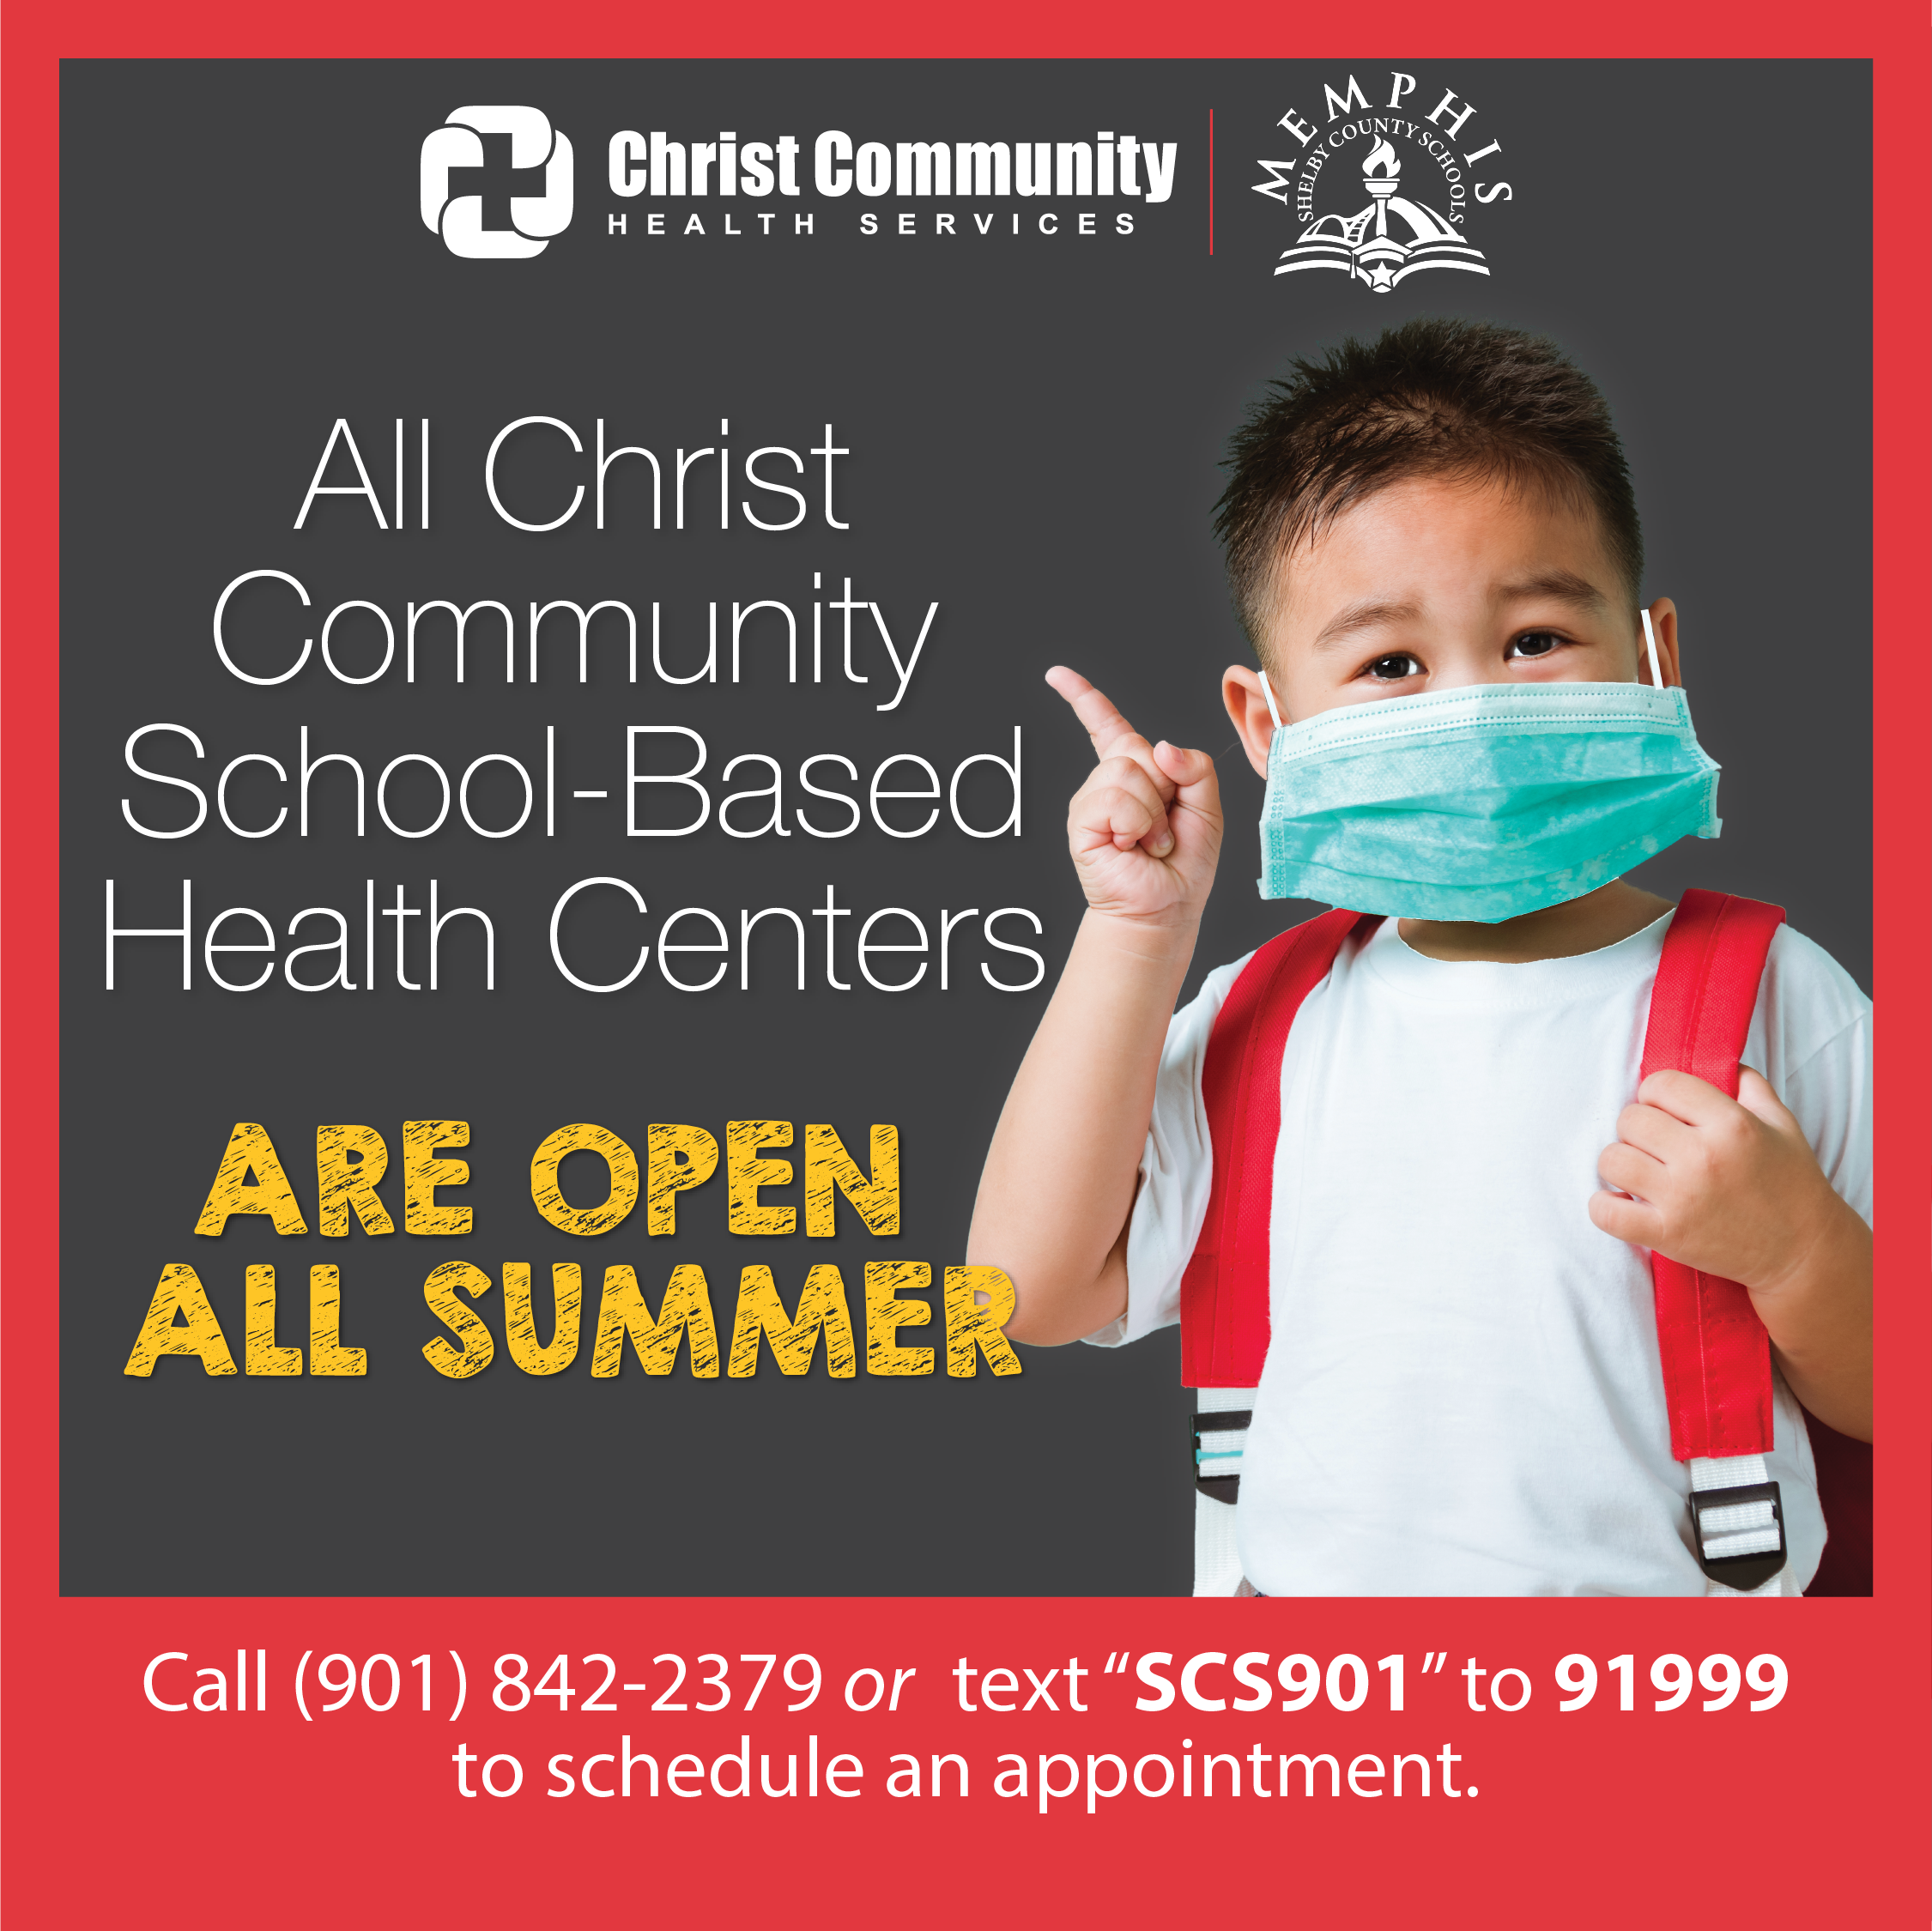 Christ Community Health Centers